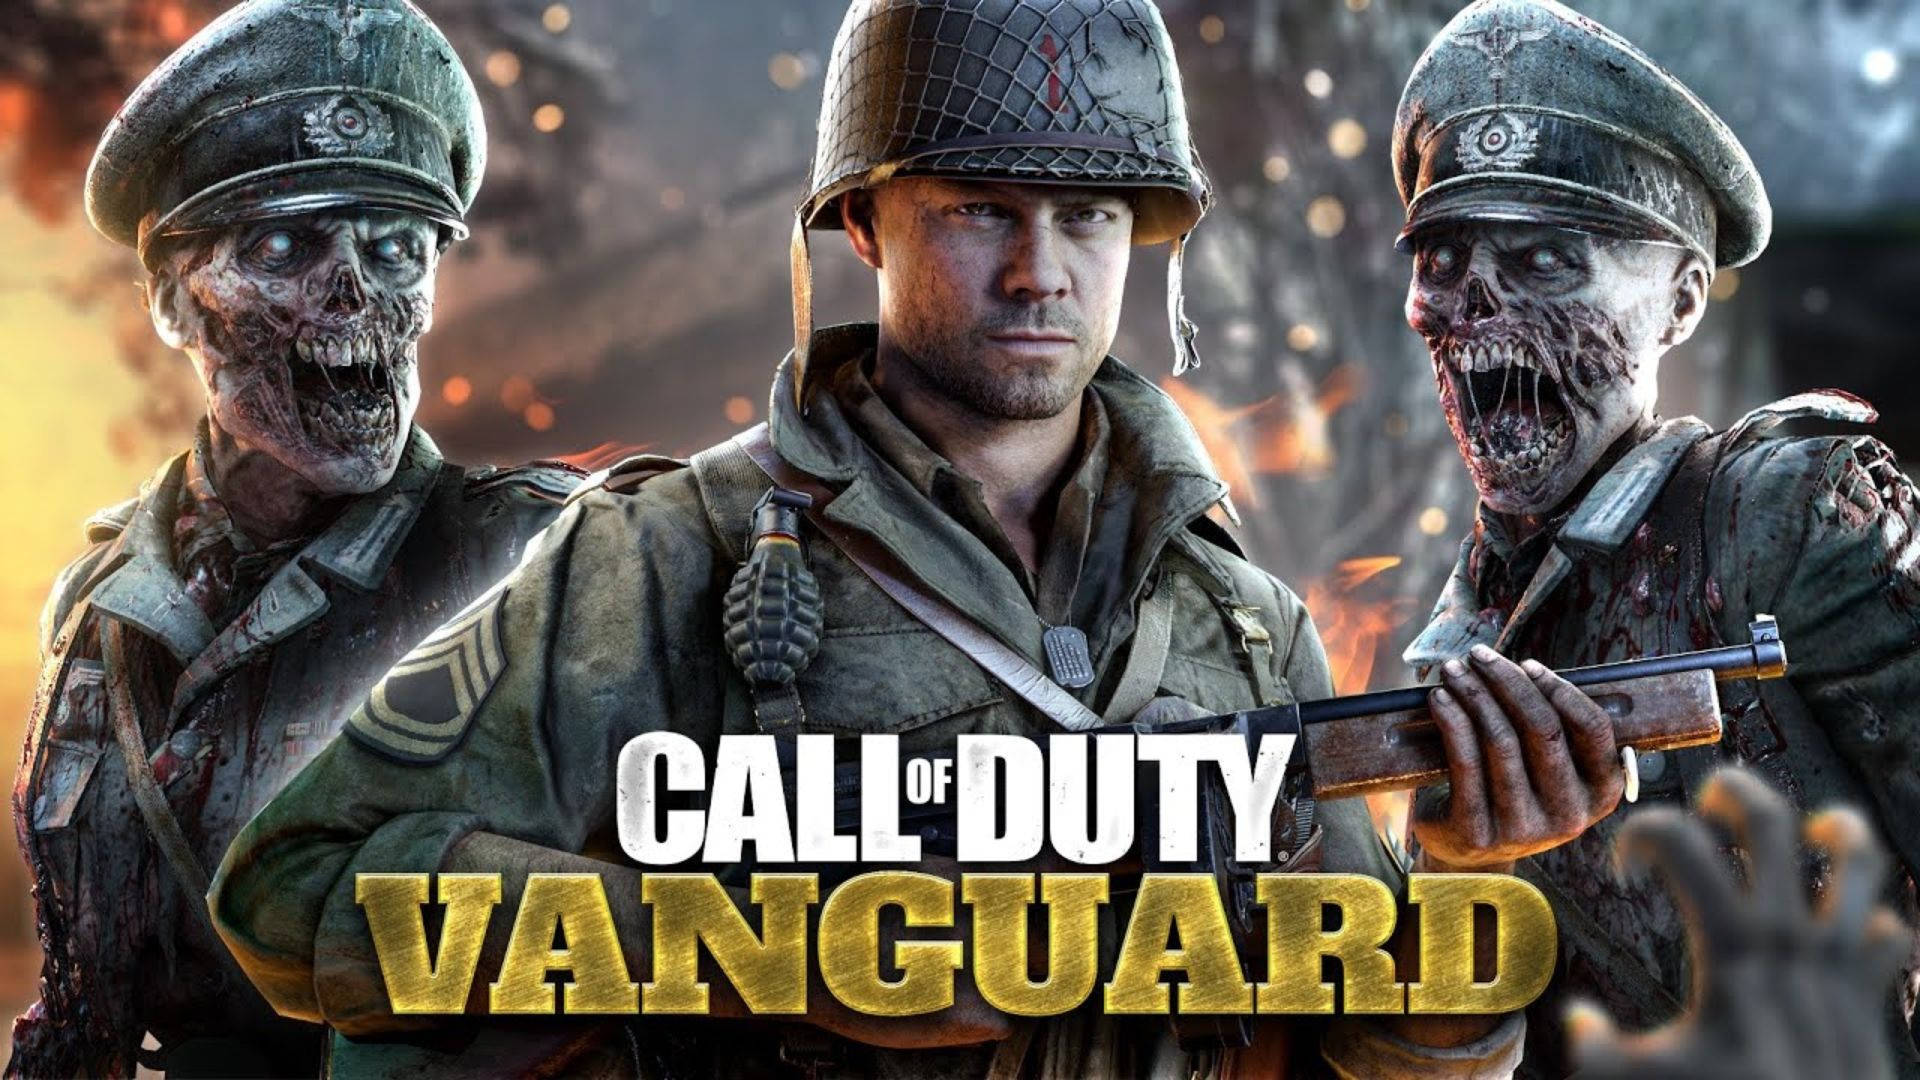 Erlebedas Nächste Level Des Gamings Mit Call Of Duty: Vanguard. Wallpaper